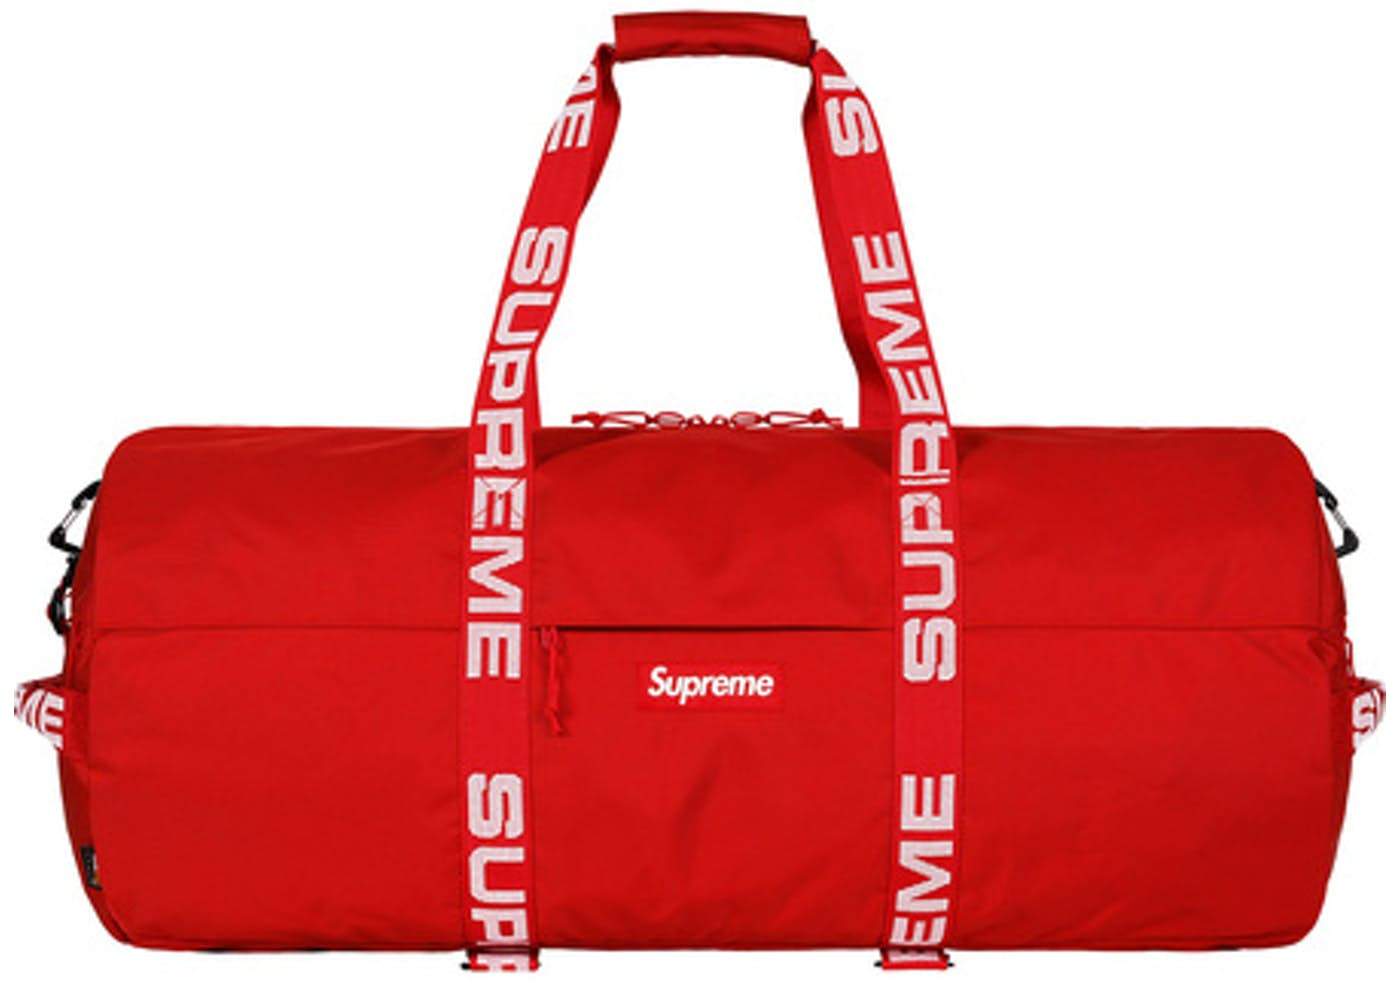 Supreme Large Duffle Bag (SS18) Black for Women